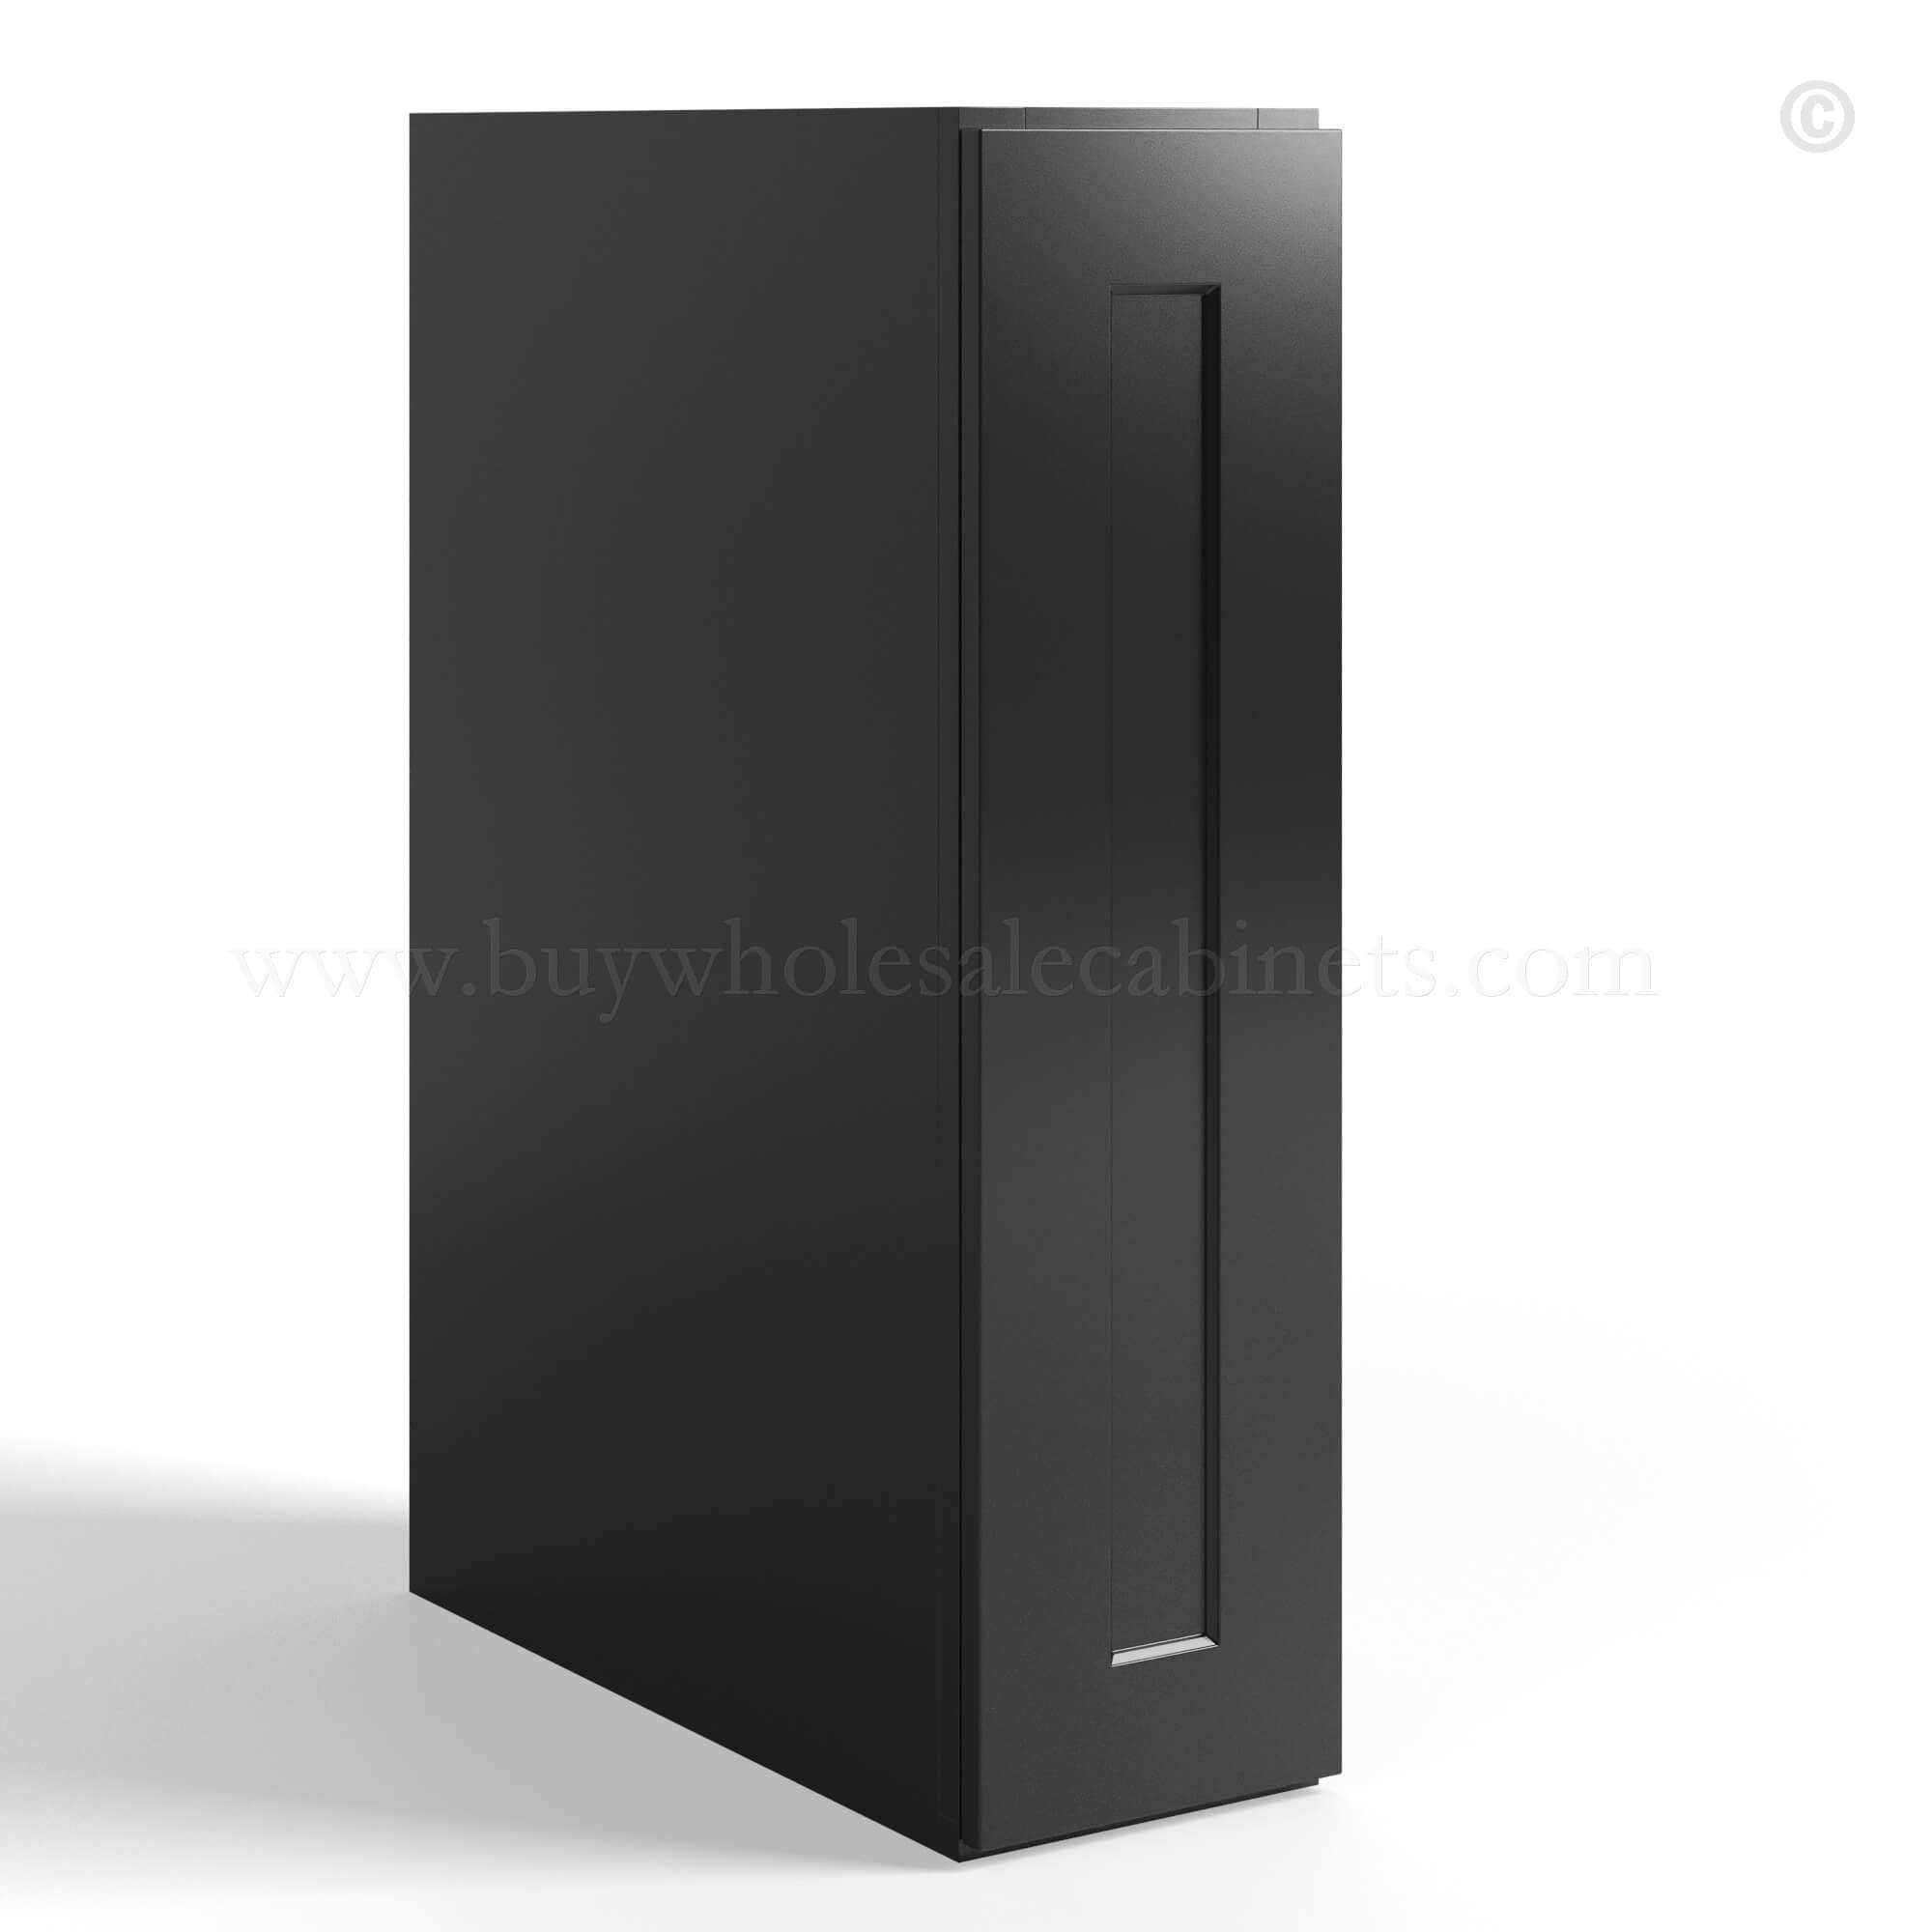 Black Shaker Full Height Door Base Cabinets Single Door, rta cabinets, wholesale cabinets